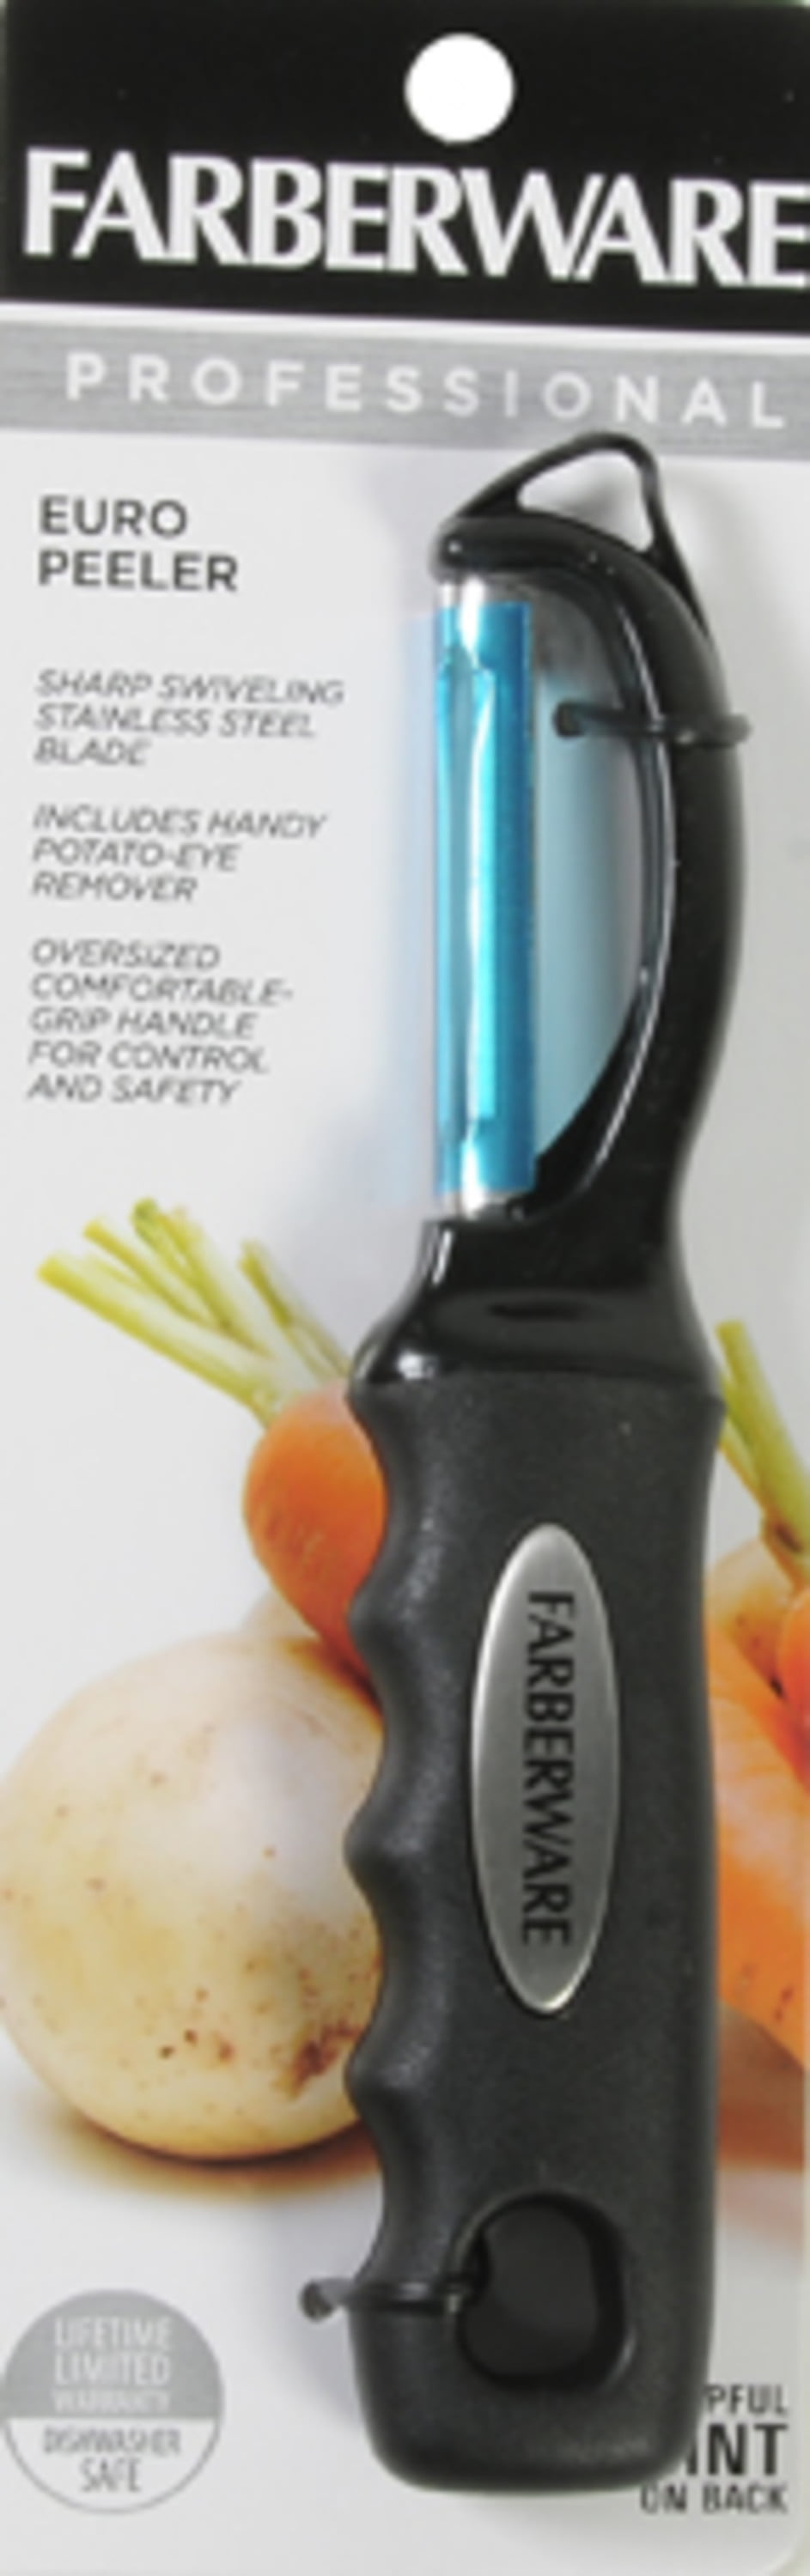 Farberware Professional Euro Vegetable Peeler with Built-in Eye Remover,  Black